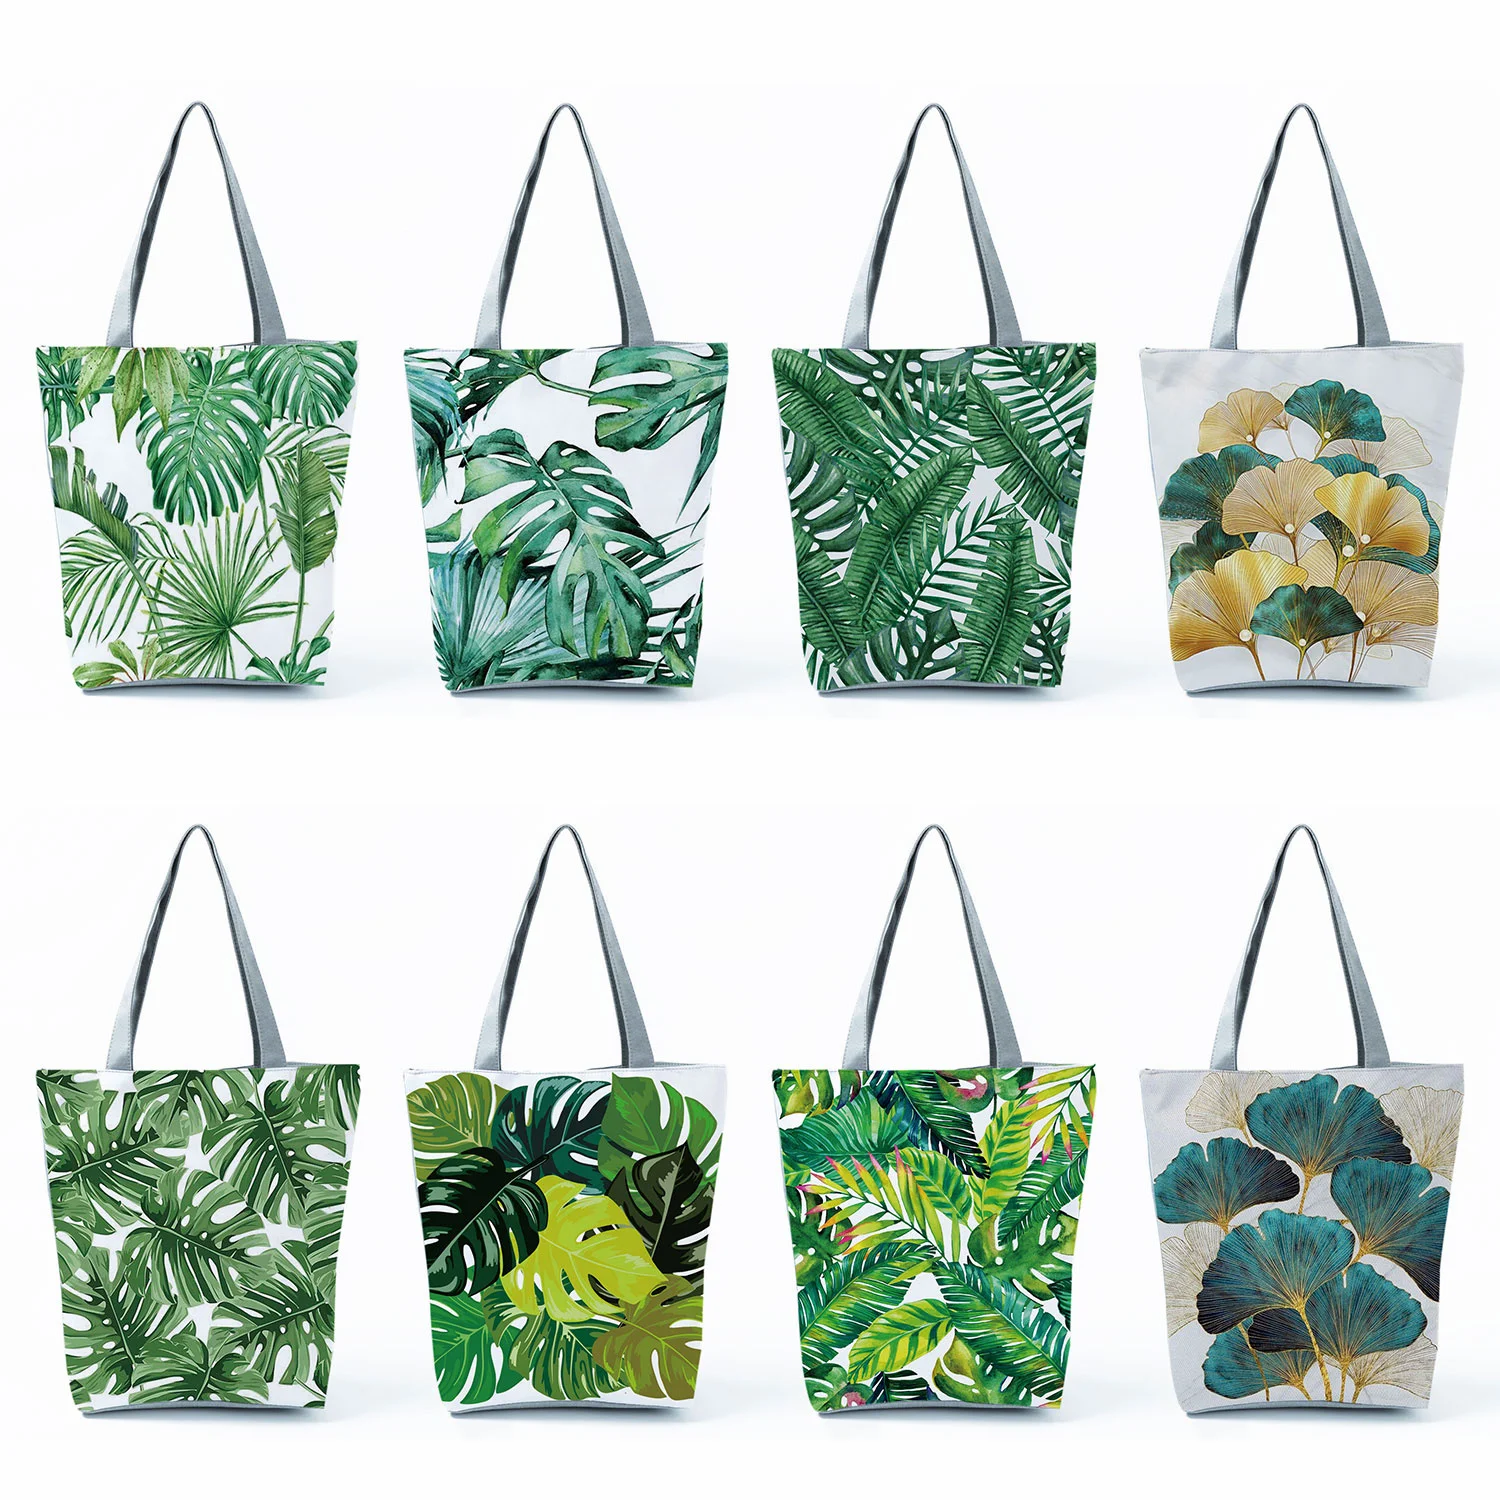 

Miyahouse Green Leaf Printed Women Handbag Foldable & Reusable Beach Bag Casual Simple Tote Large Capacity Shoulder Shopping Bag